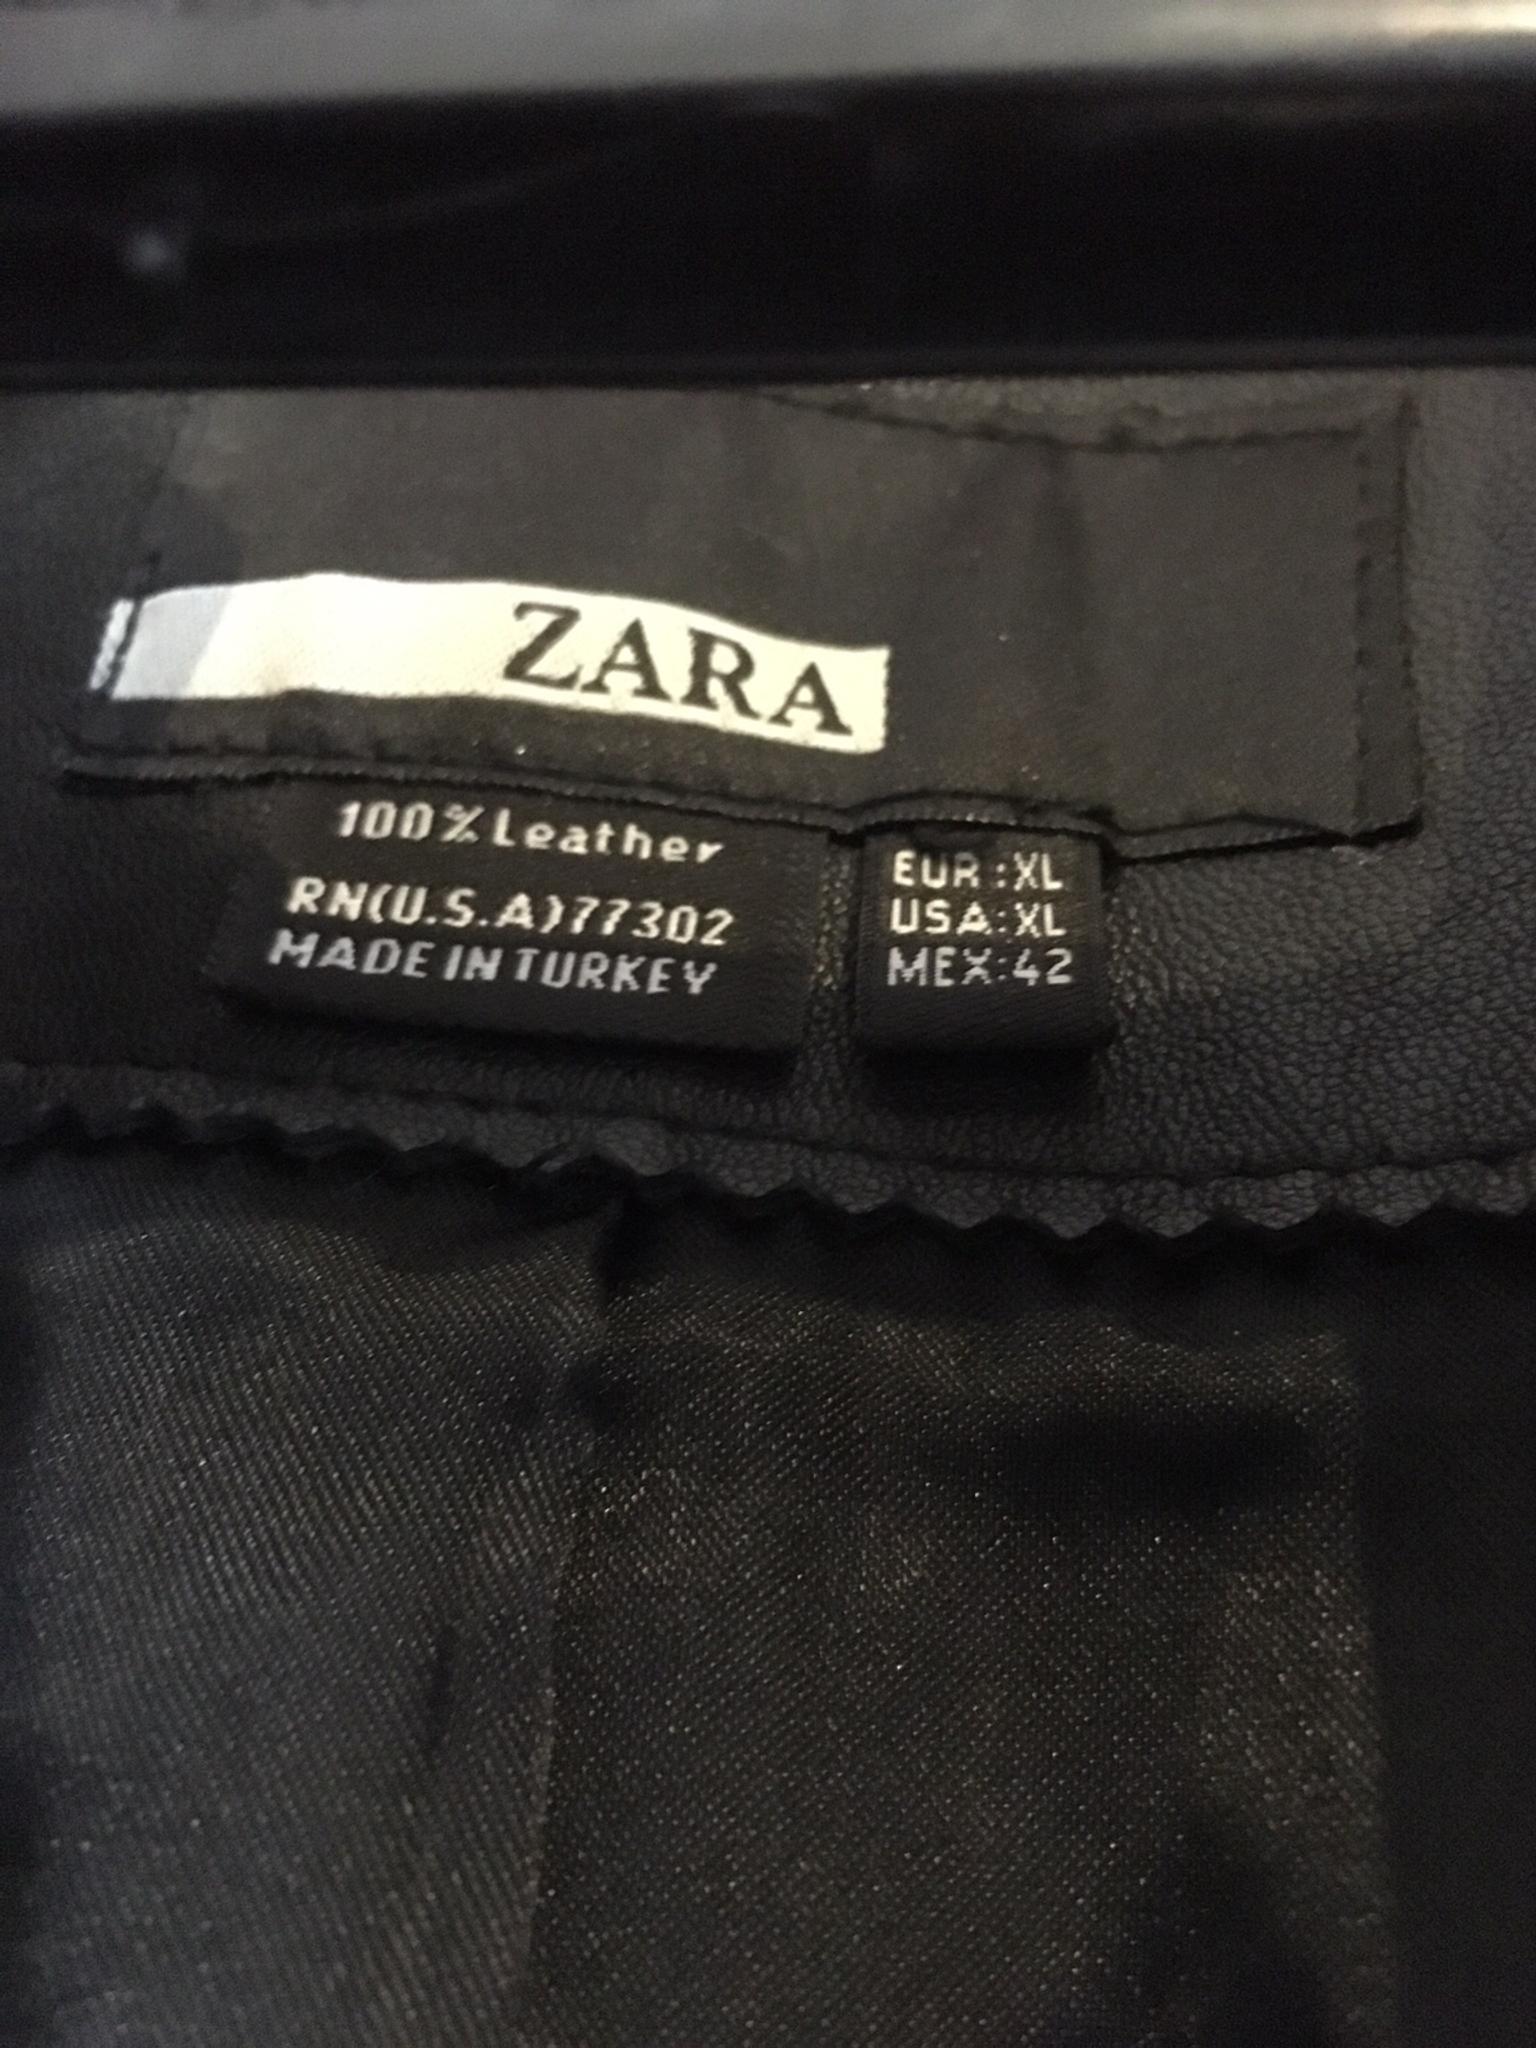 zara rn 77302 jacket